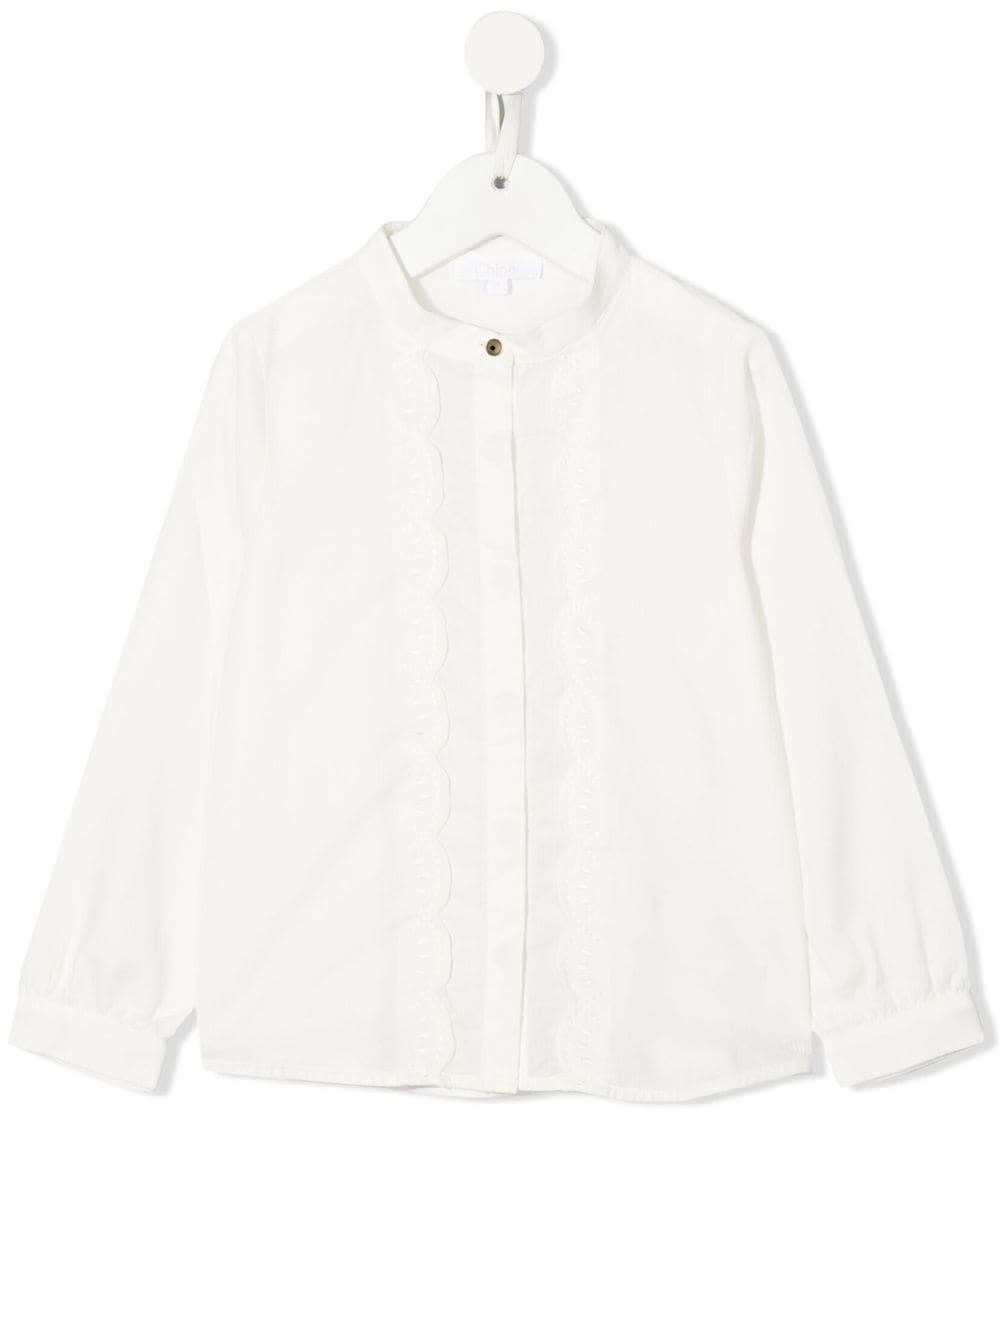 Chloé Kids White Embroidered Shirt